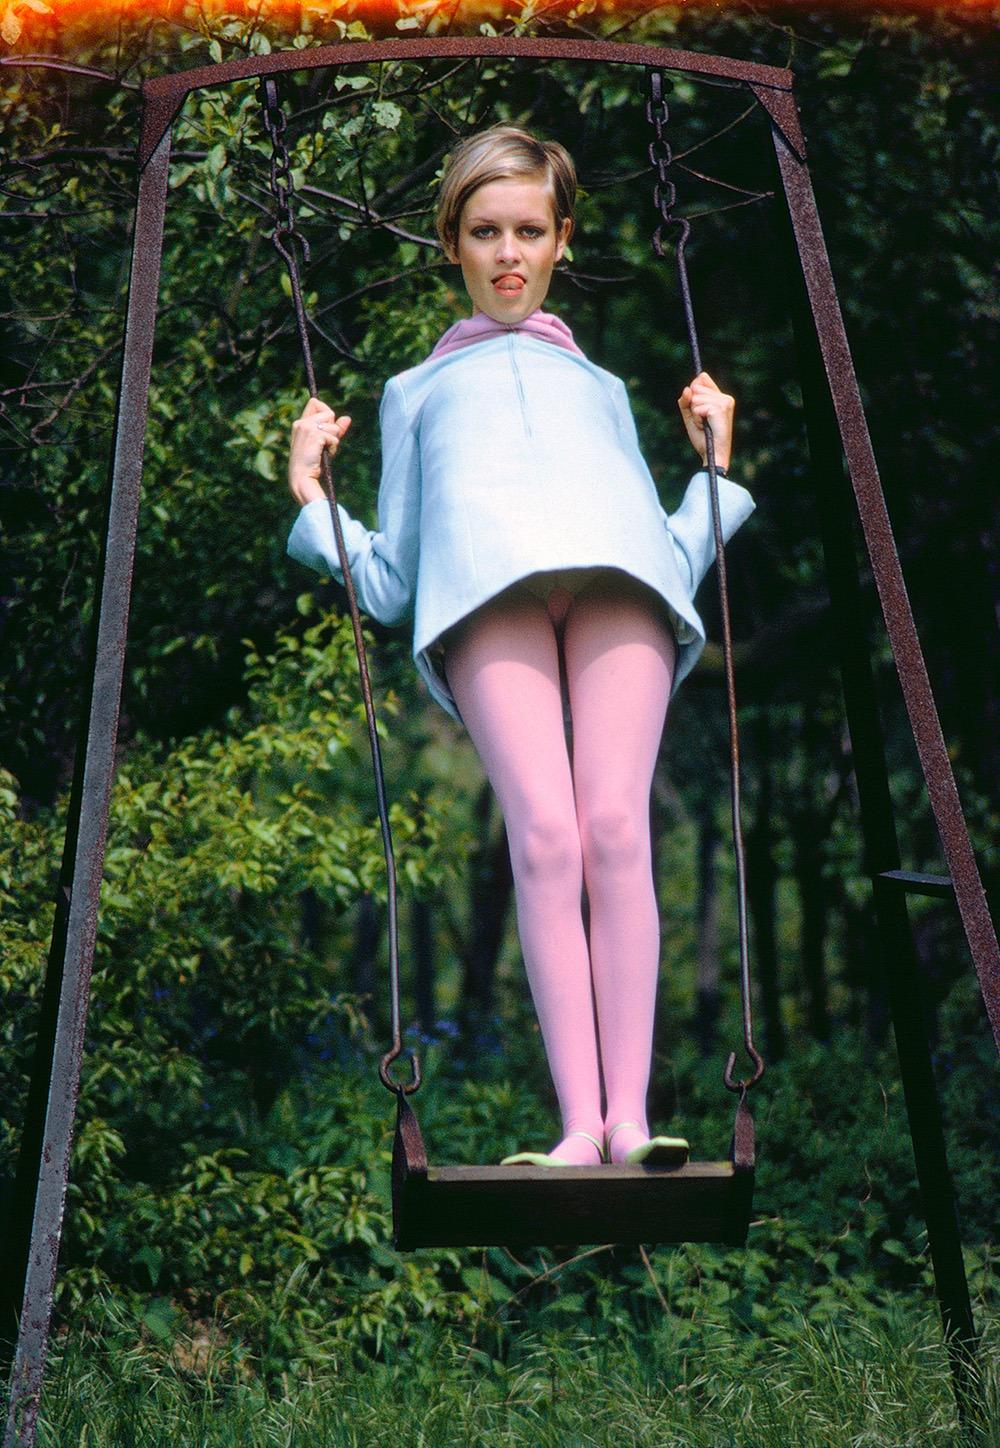 Color Photograph David Steen - Twiggy In Pink Tights On Swing 1967, imprimé de succession limité 